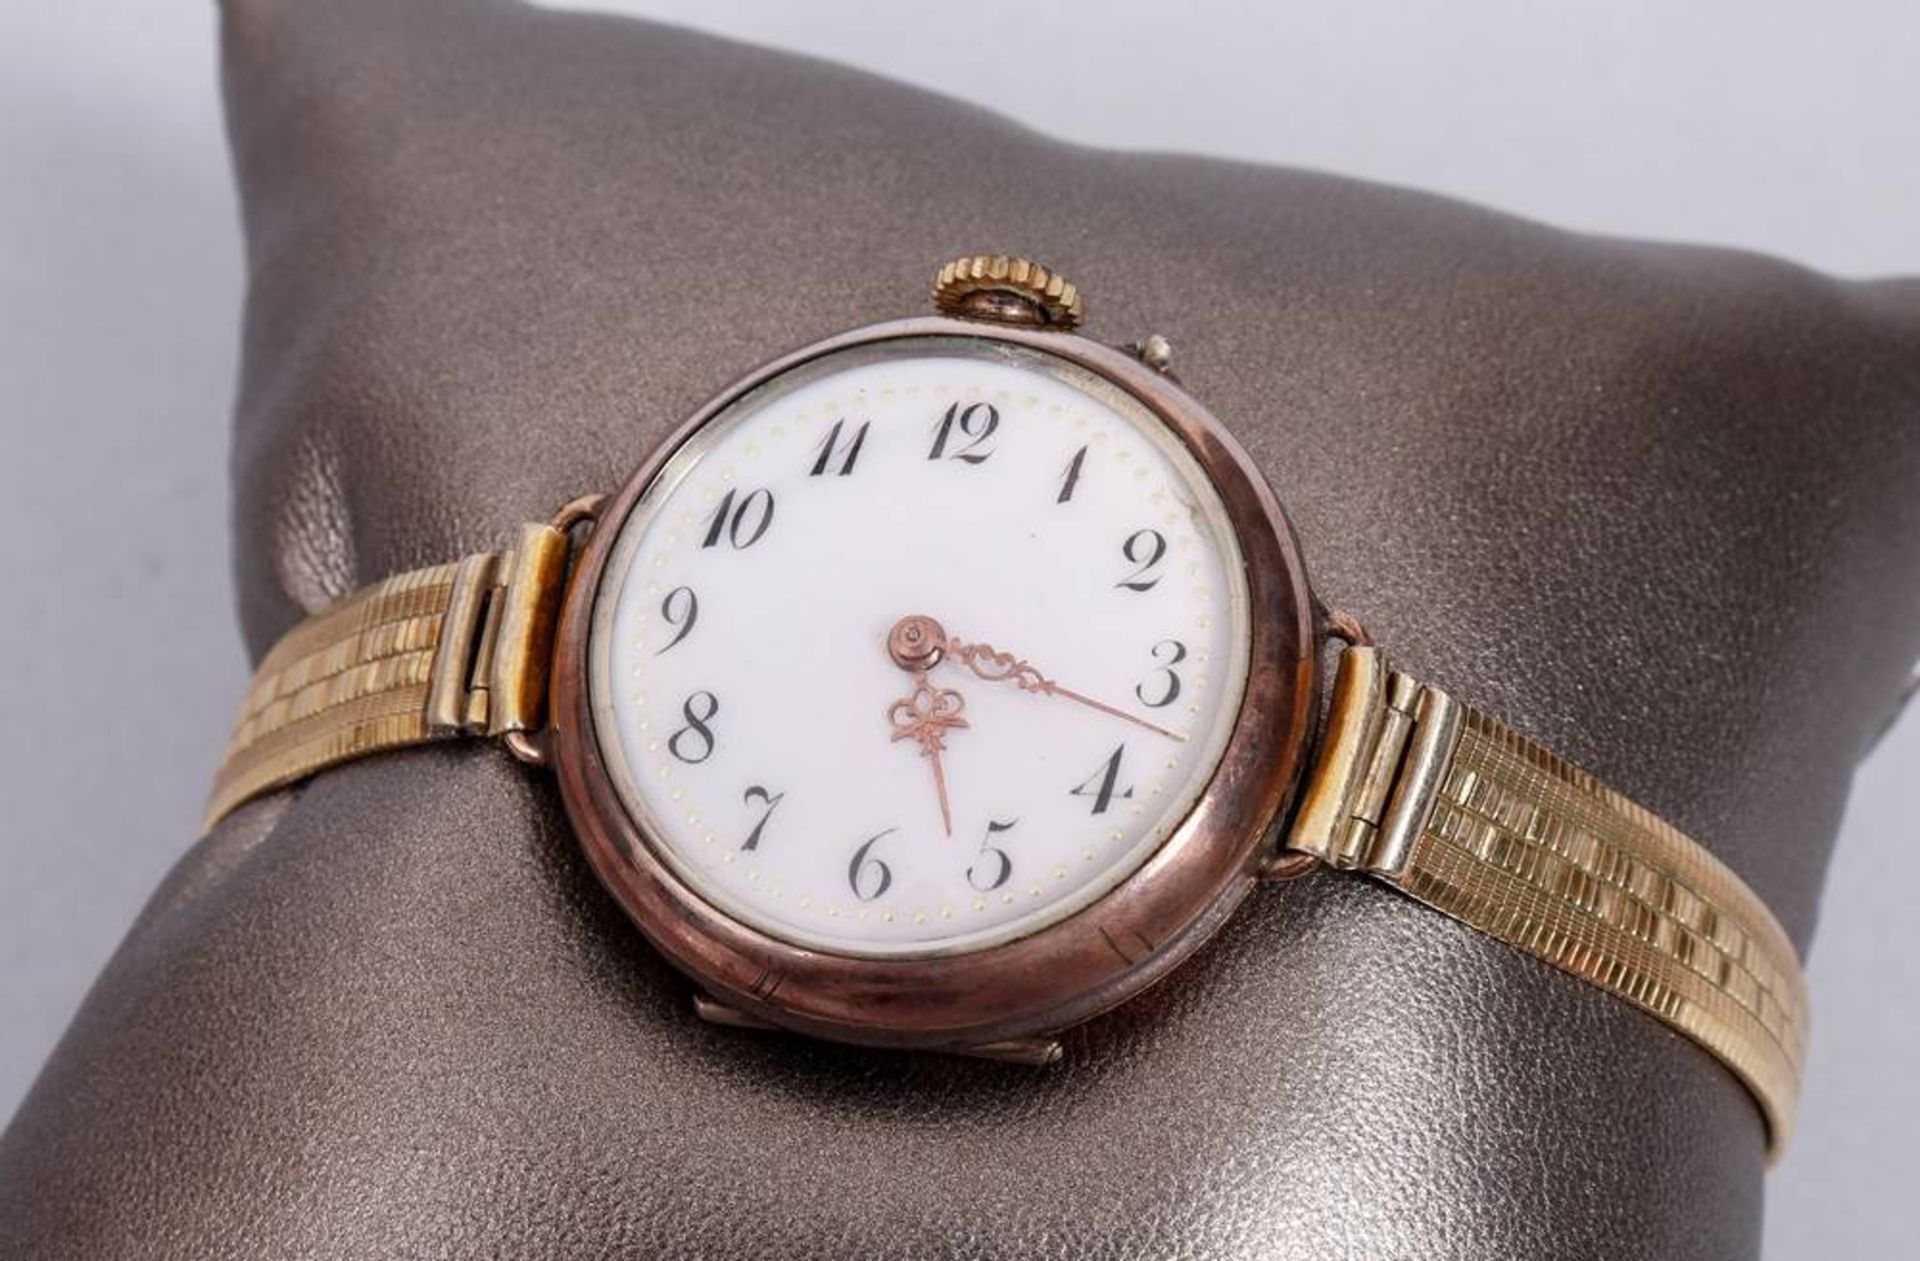 Wrist watch, 800 silver, 1st half 20th C. - Image 2 of 4